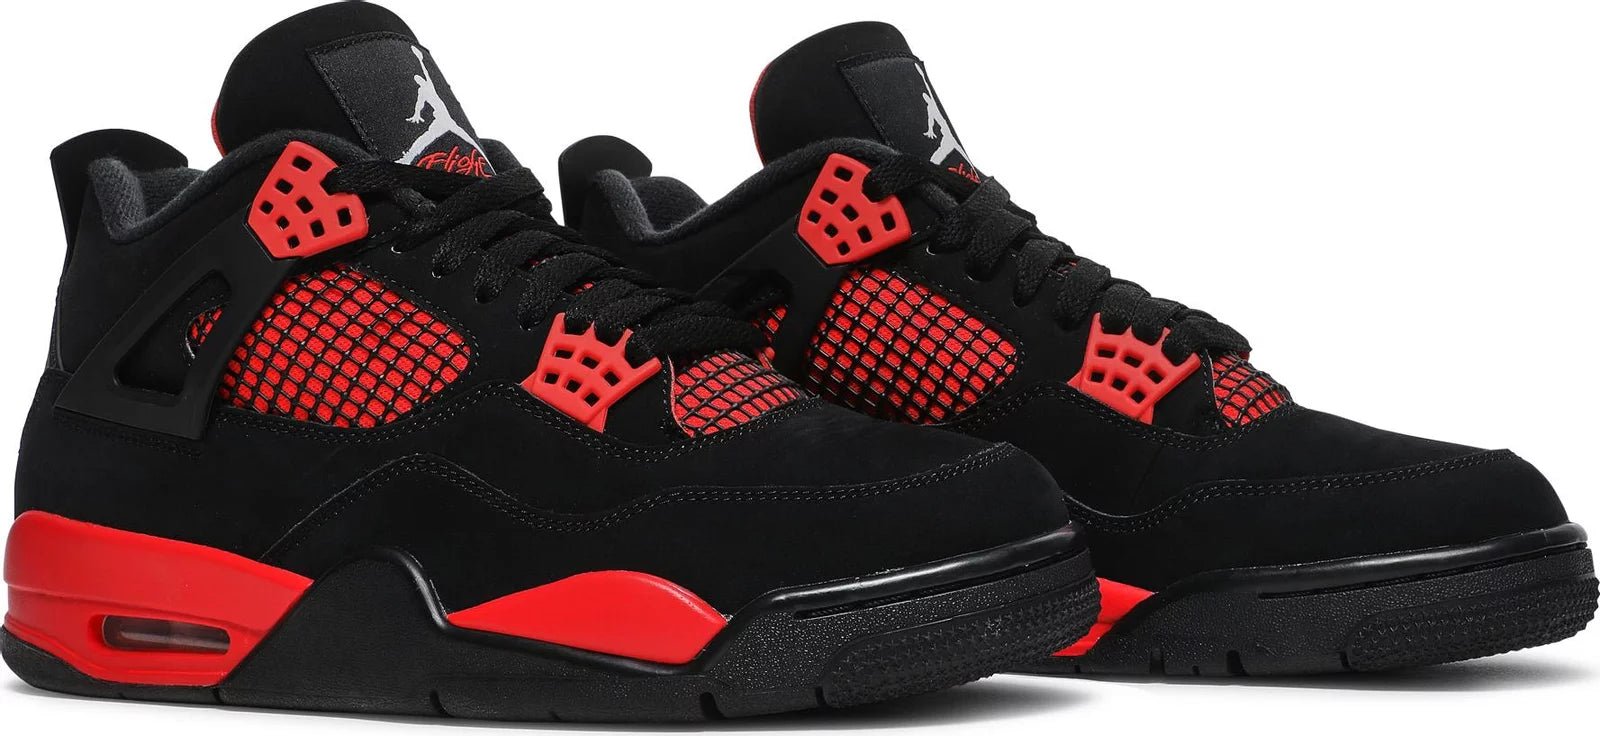 Air Jordan 4 Retro Red Thunder - Sneakersbe Sneakers Sale Online